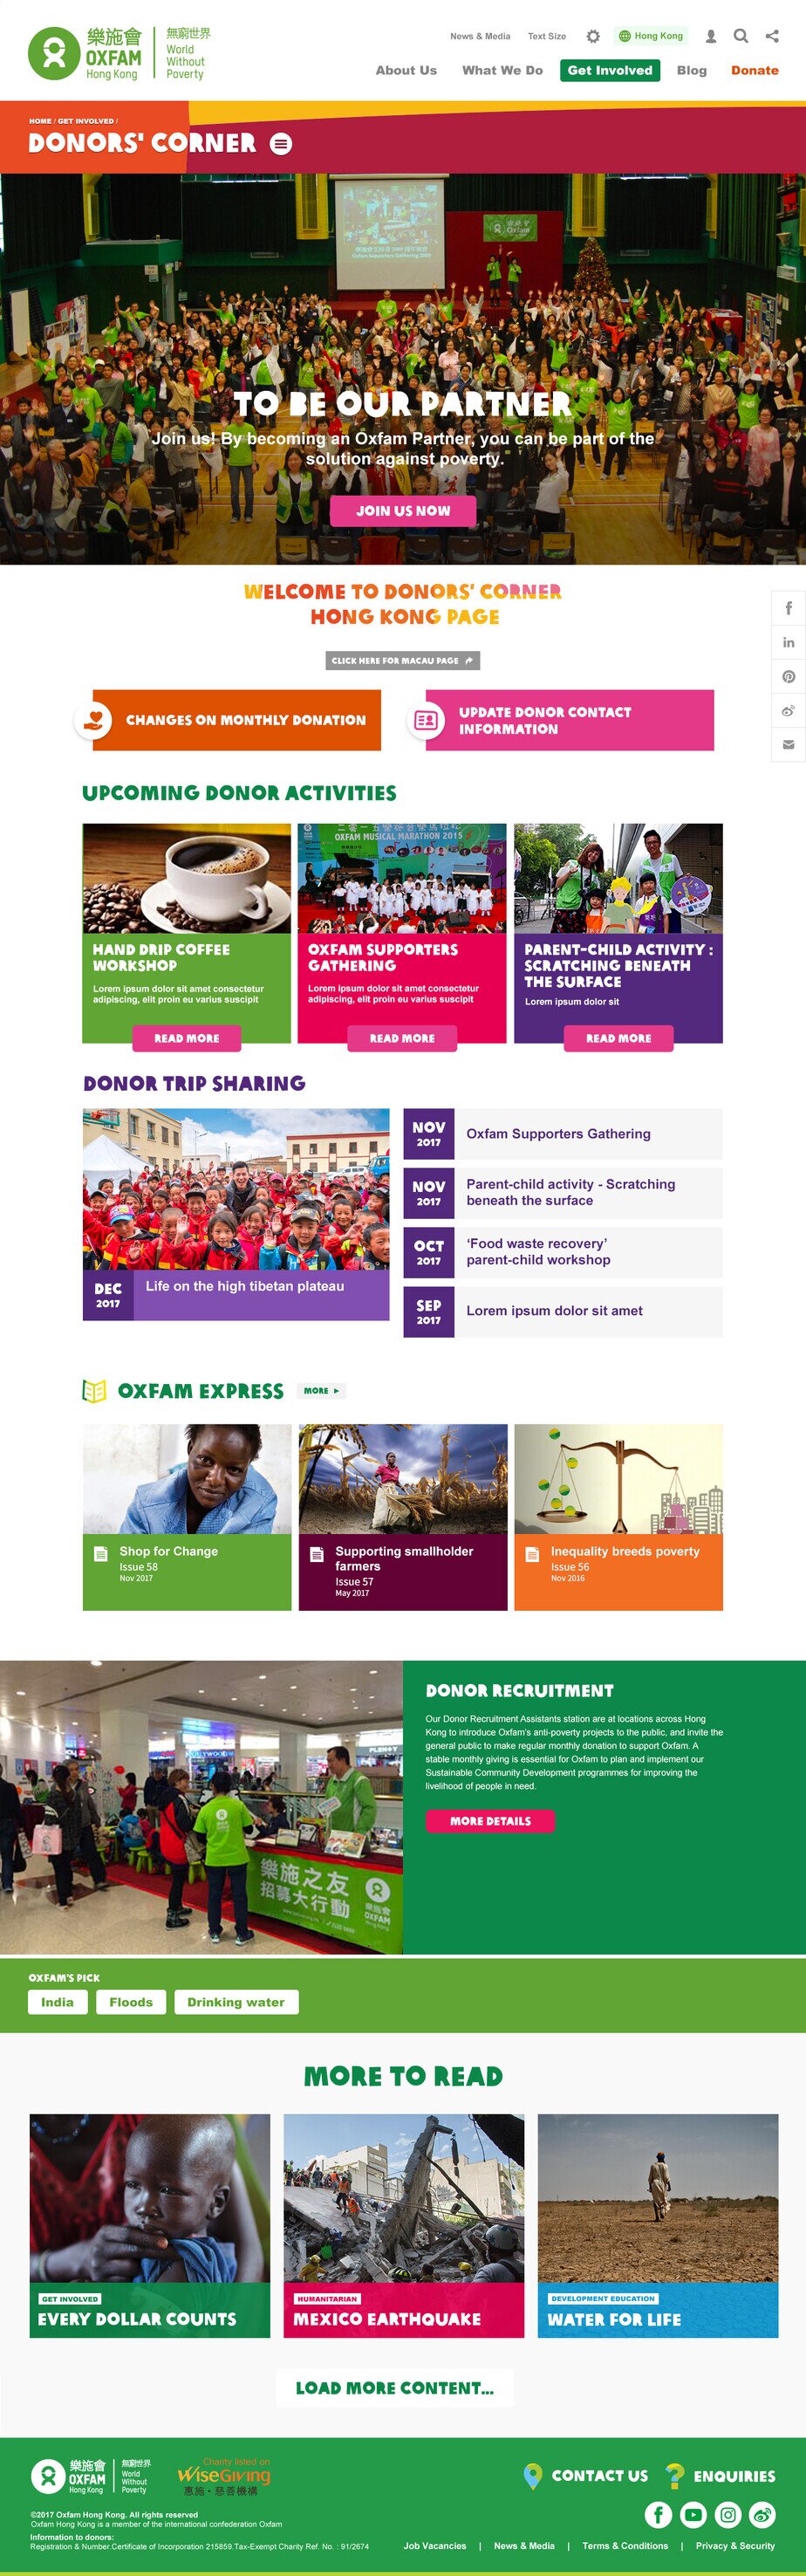 Oxfam Hong Kong Desktop Donars